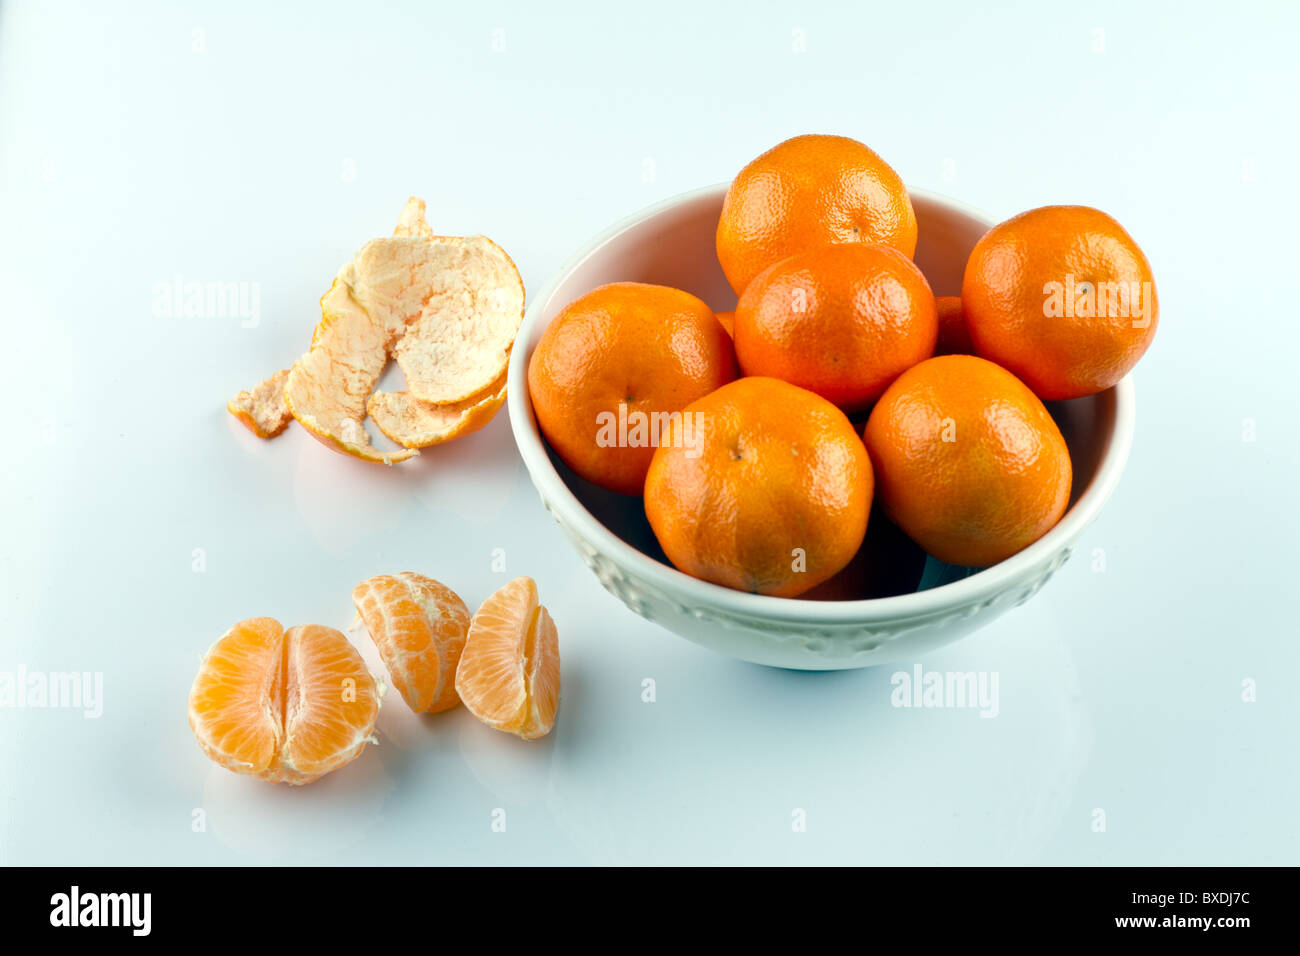 Sbucciate le clementine e clementine in vaschetta bianca sulla superficie bianca Foto Stock